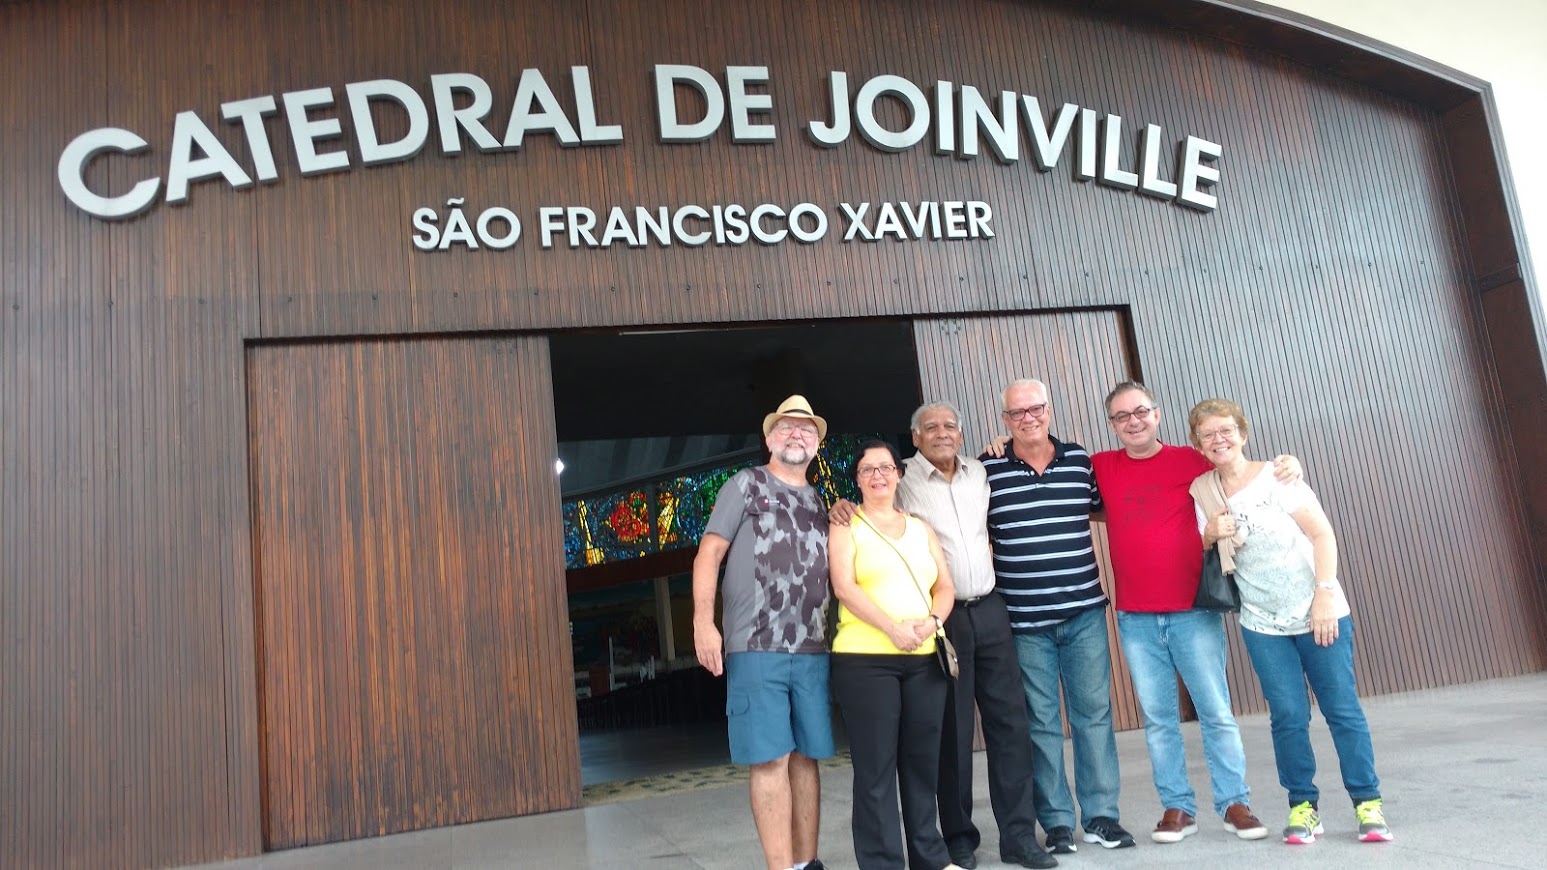 Sete surdos em frente à Catedral de Joinville. Fachada de madeira escura, e escrito Catedral de Joinville, São Francisco Xavier.